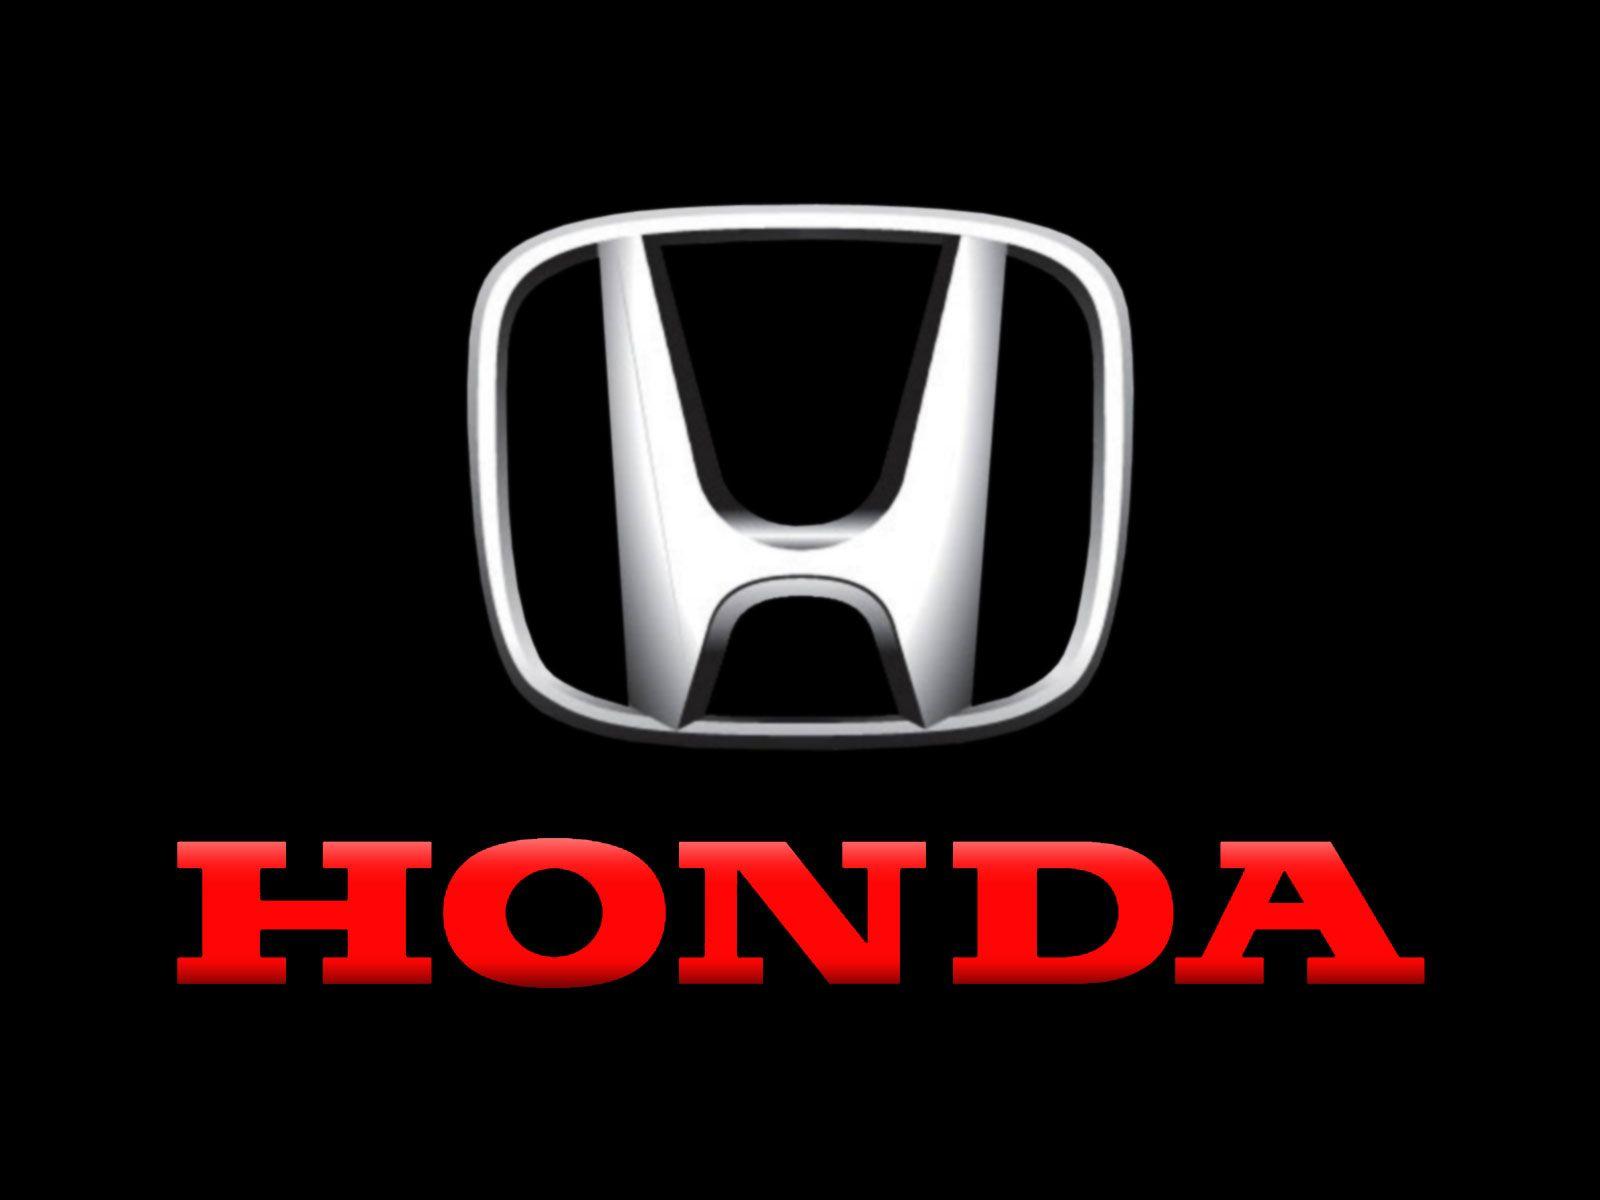 American Automotive Company Ka Logo - Honda Logo, Honda Car Symbol Meaning and History | Car Brand Names.com